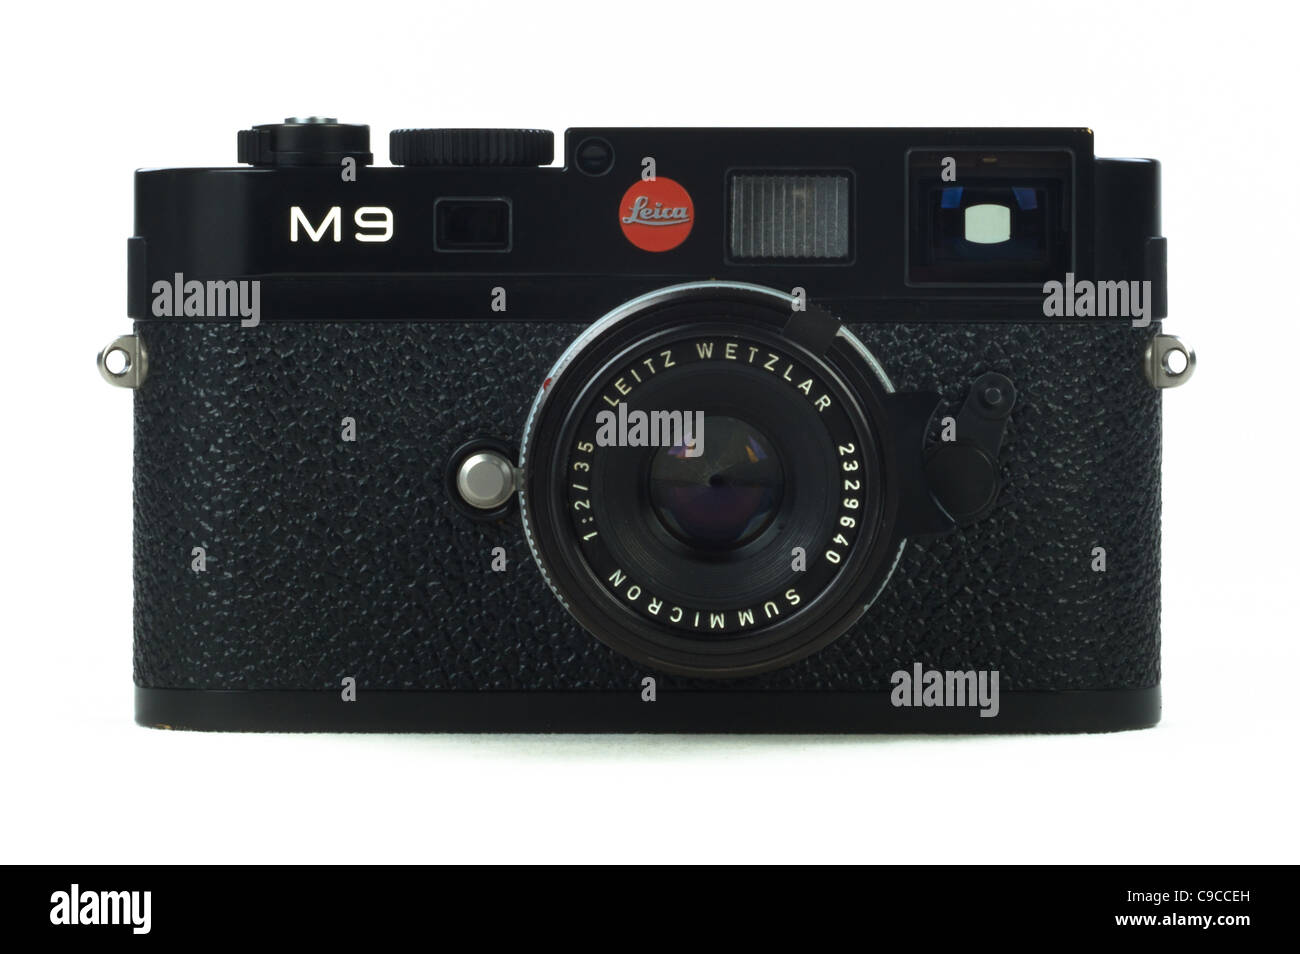 Eica M9 Telemetro digitale fotocamera con 35mm Leitz Summicron 'bokeh di fondo re Lens" Foto Stock